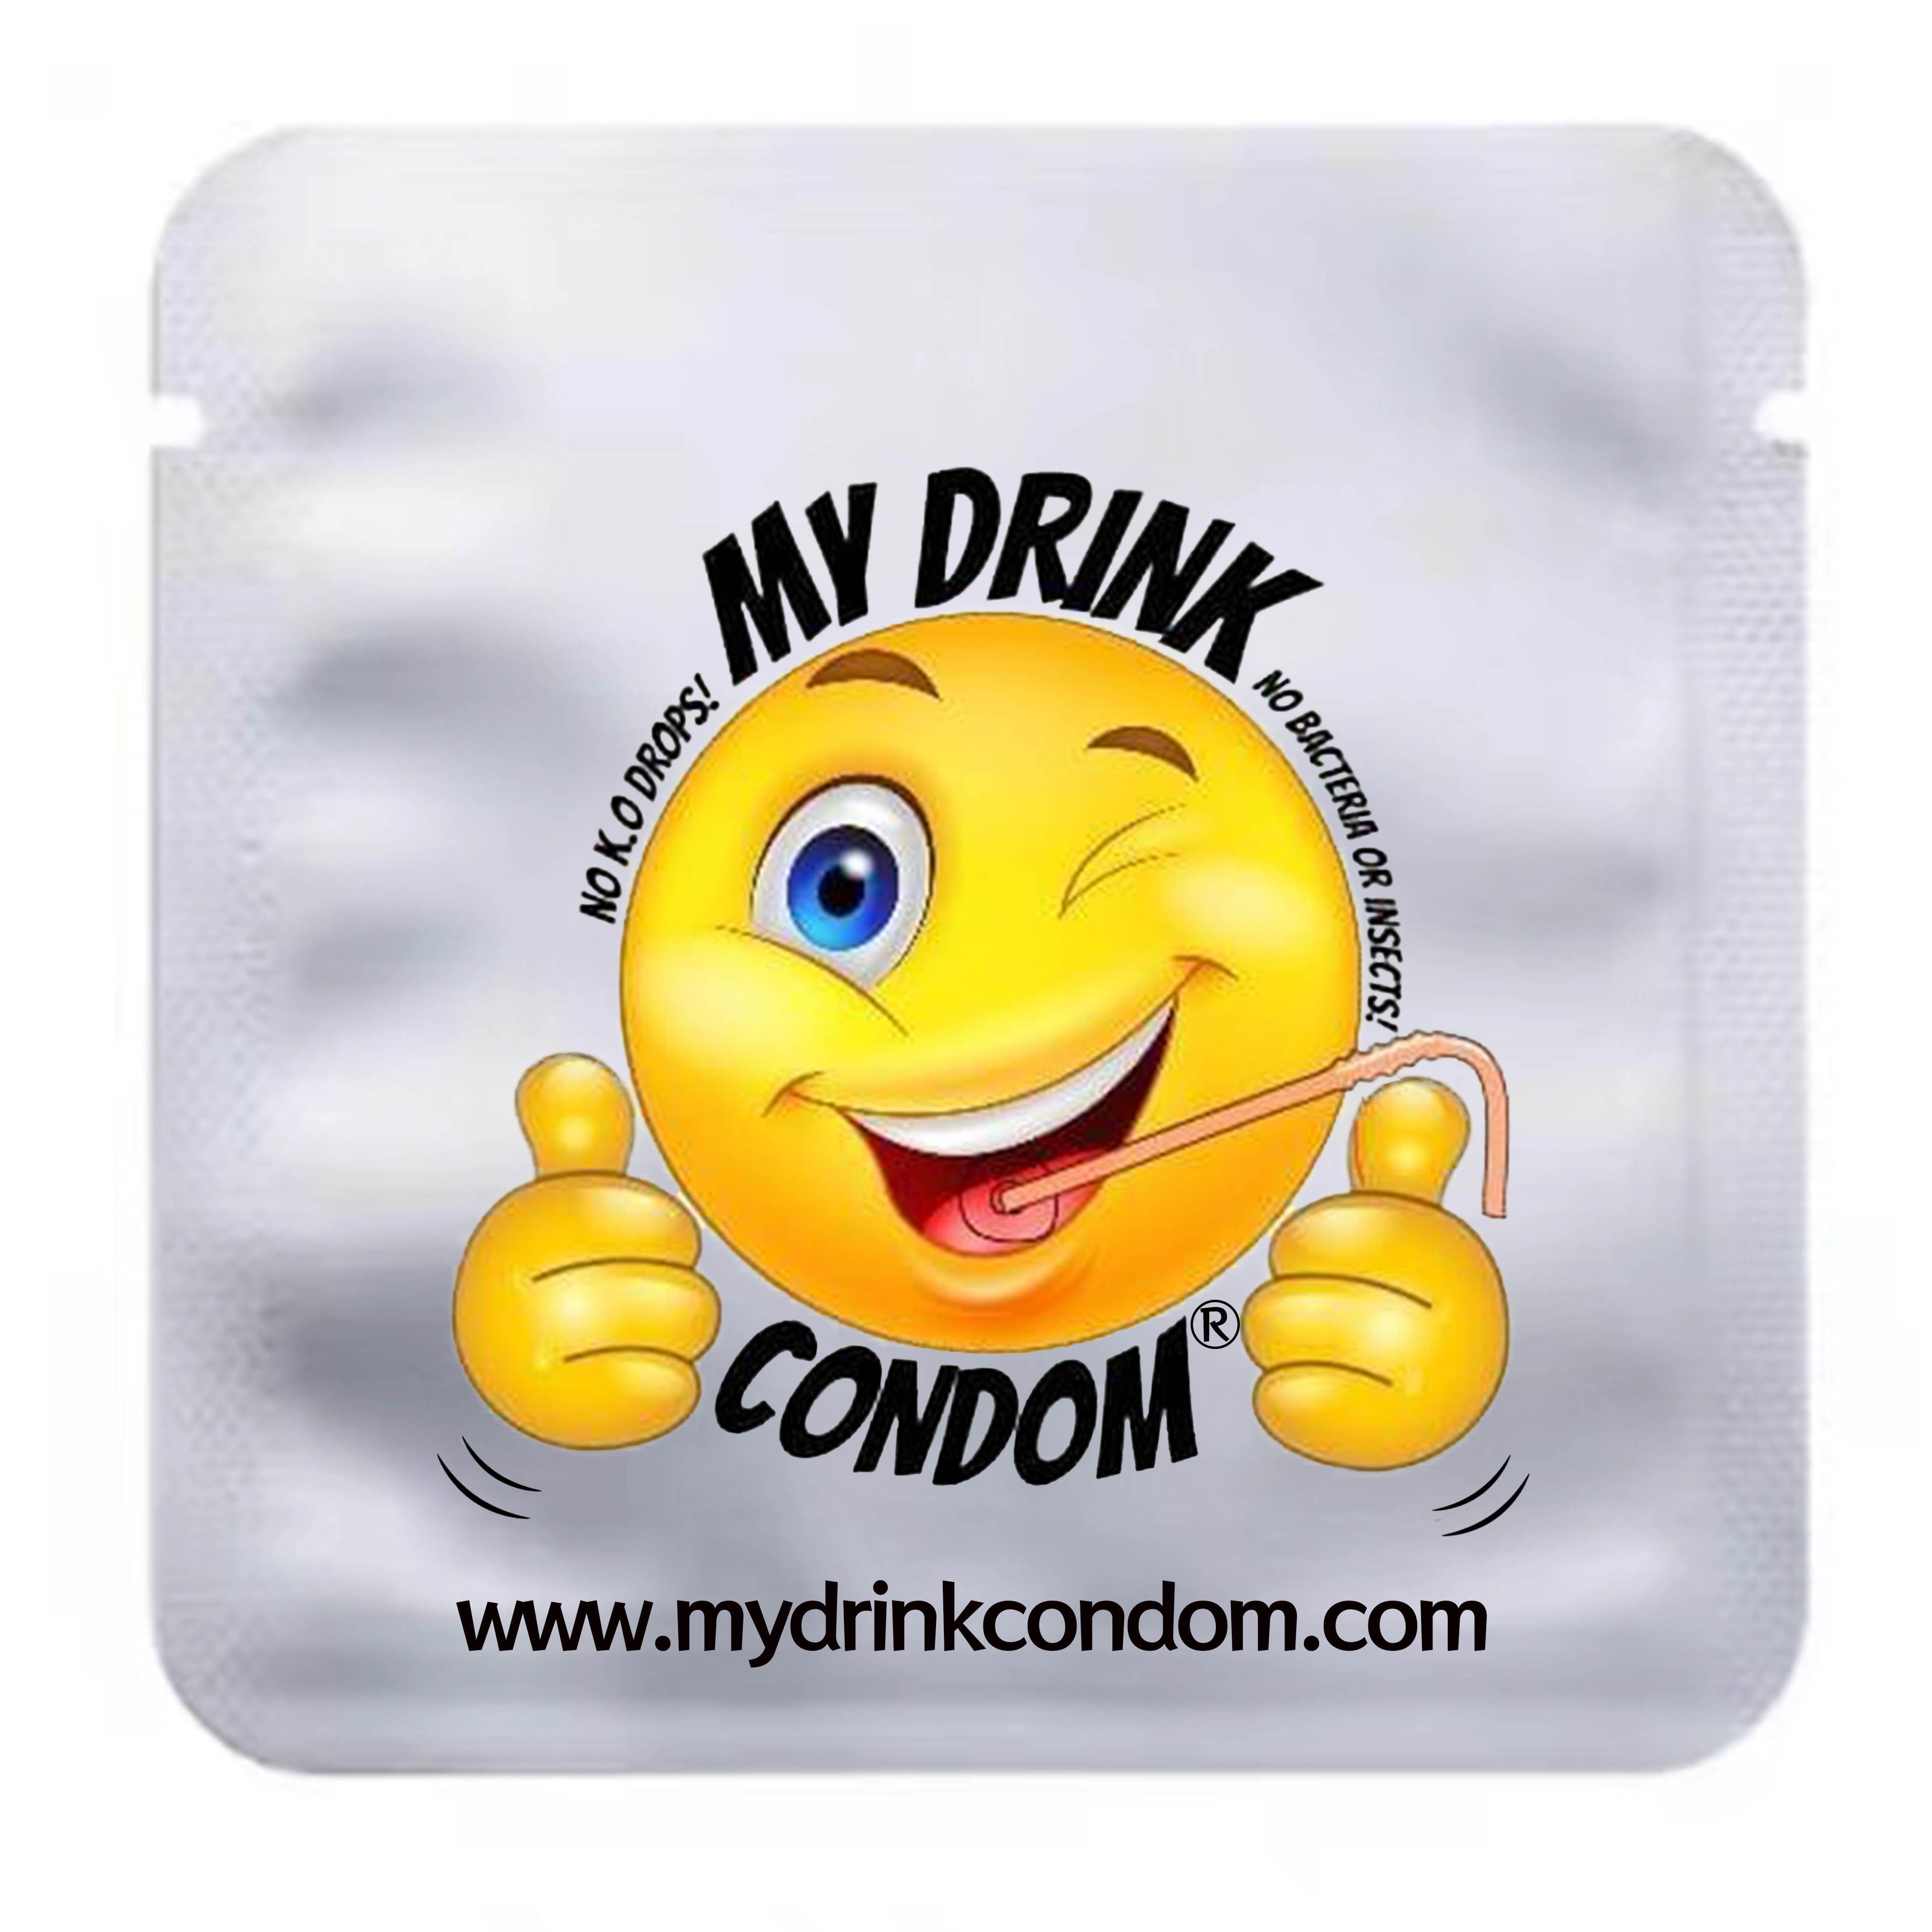 Load video: My Drink Condom Video